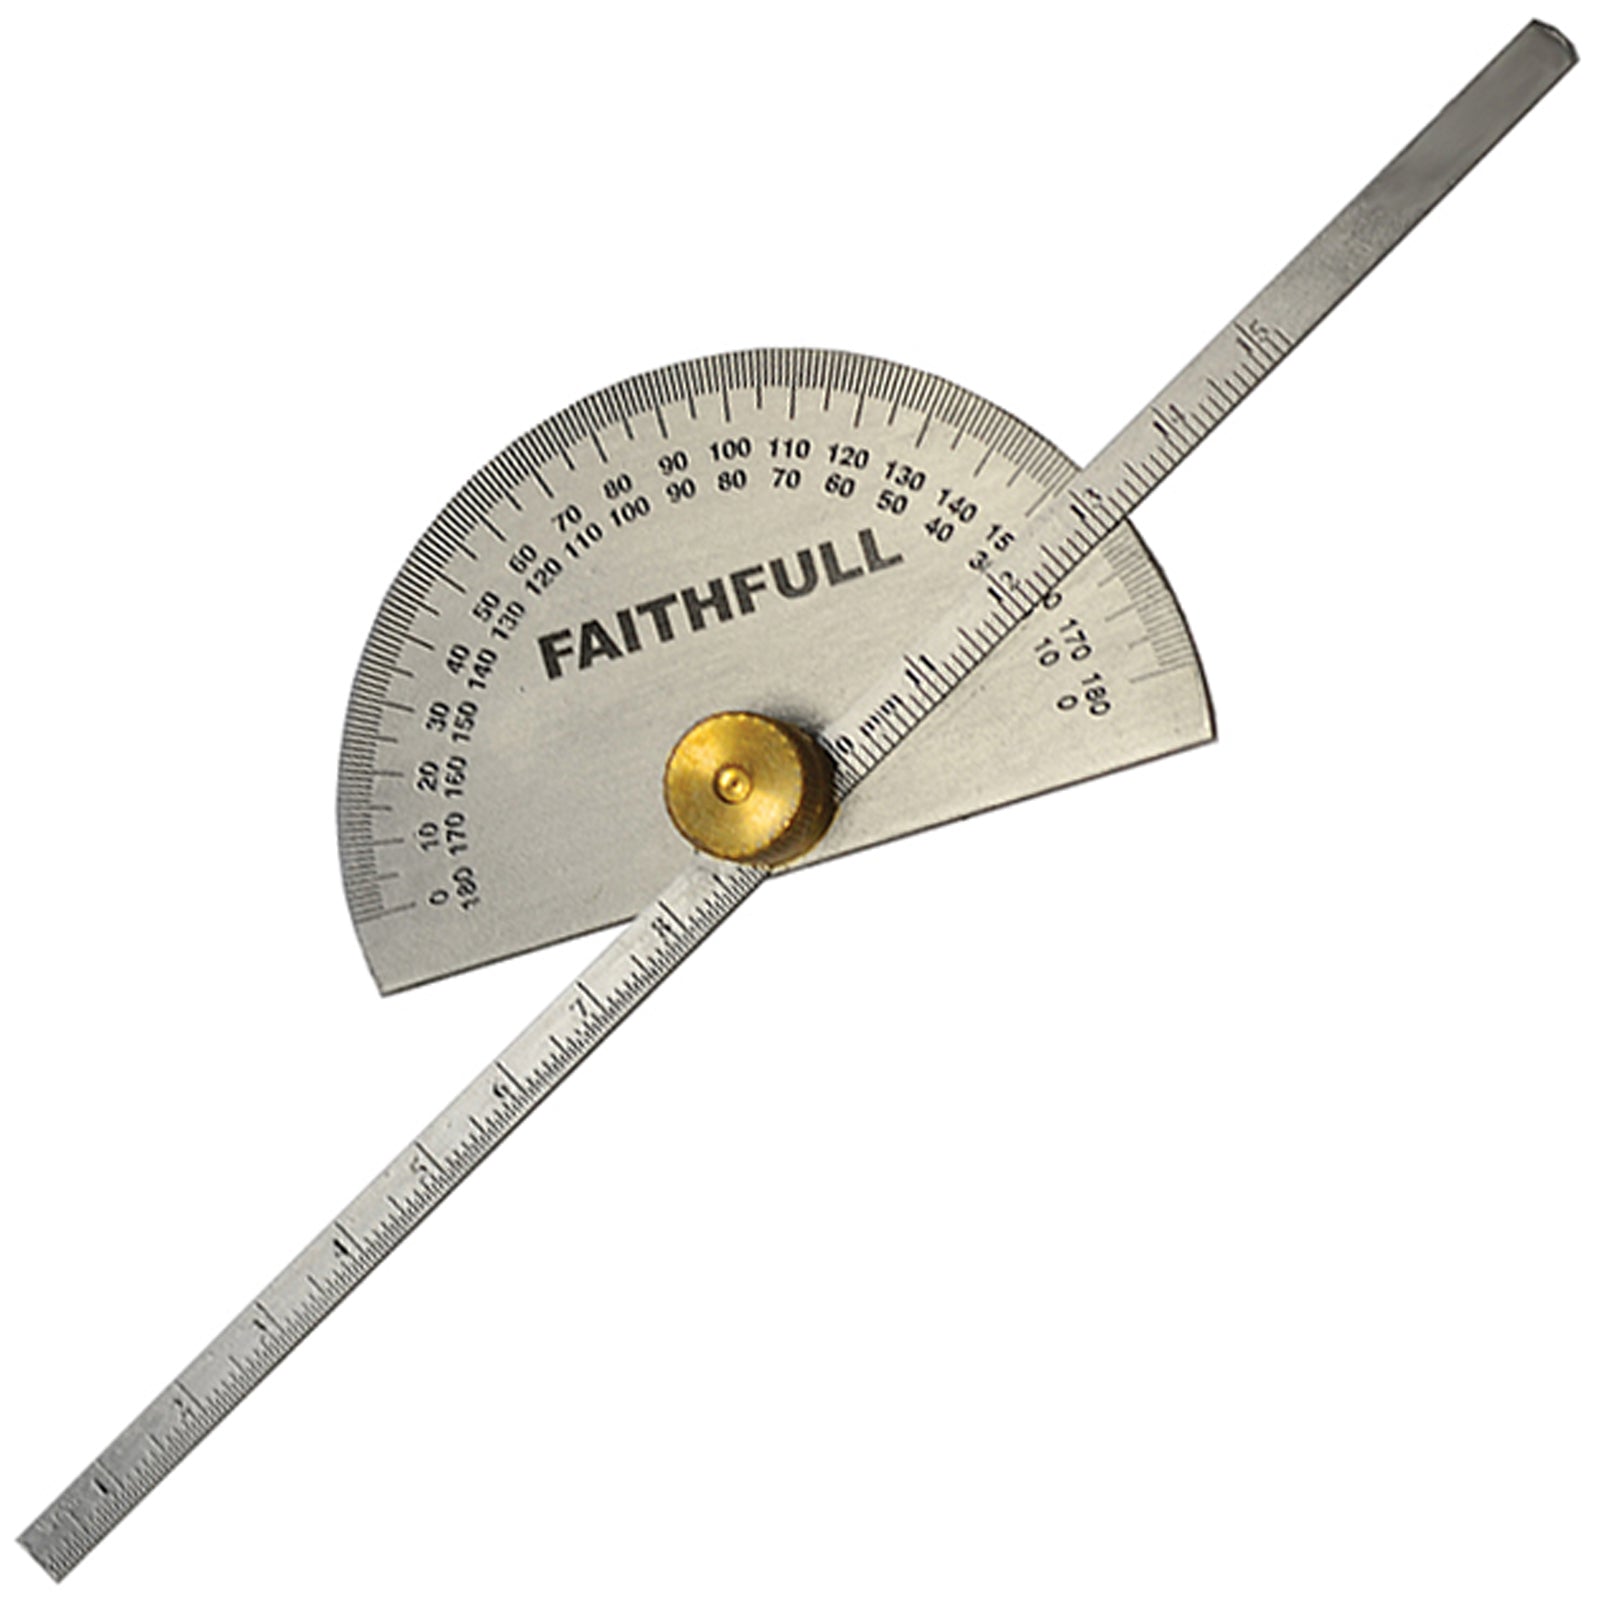 Faithfull 150mm Depth Gauge with Protractor